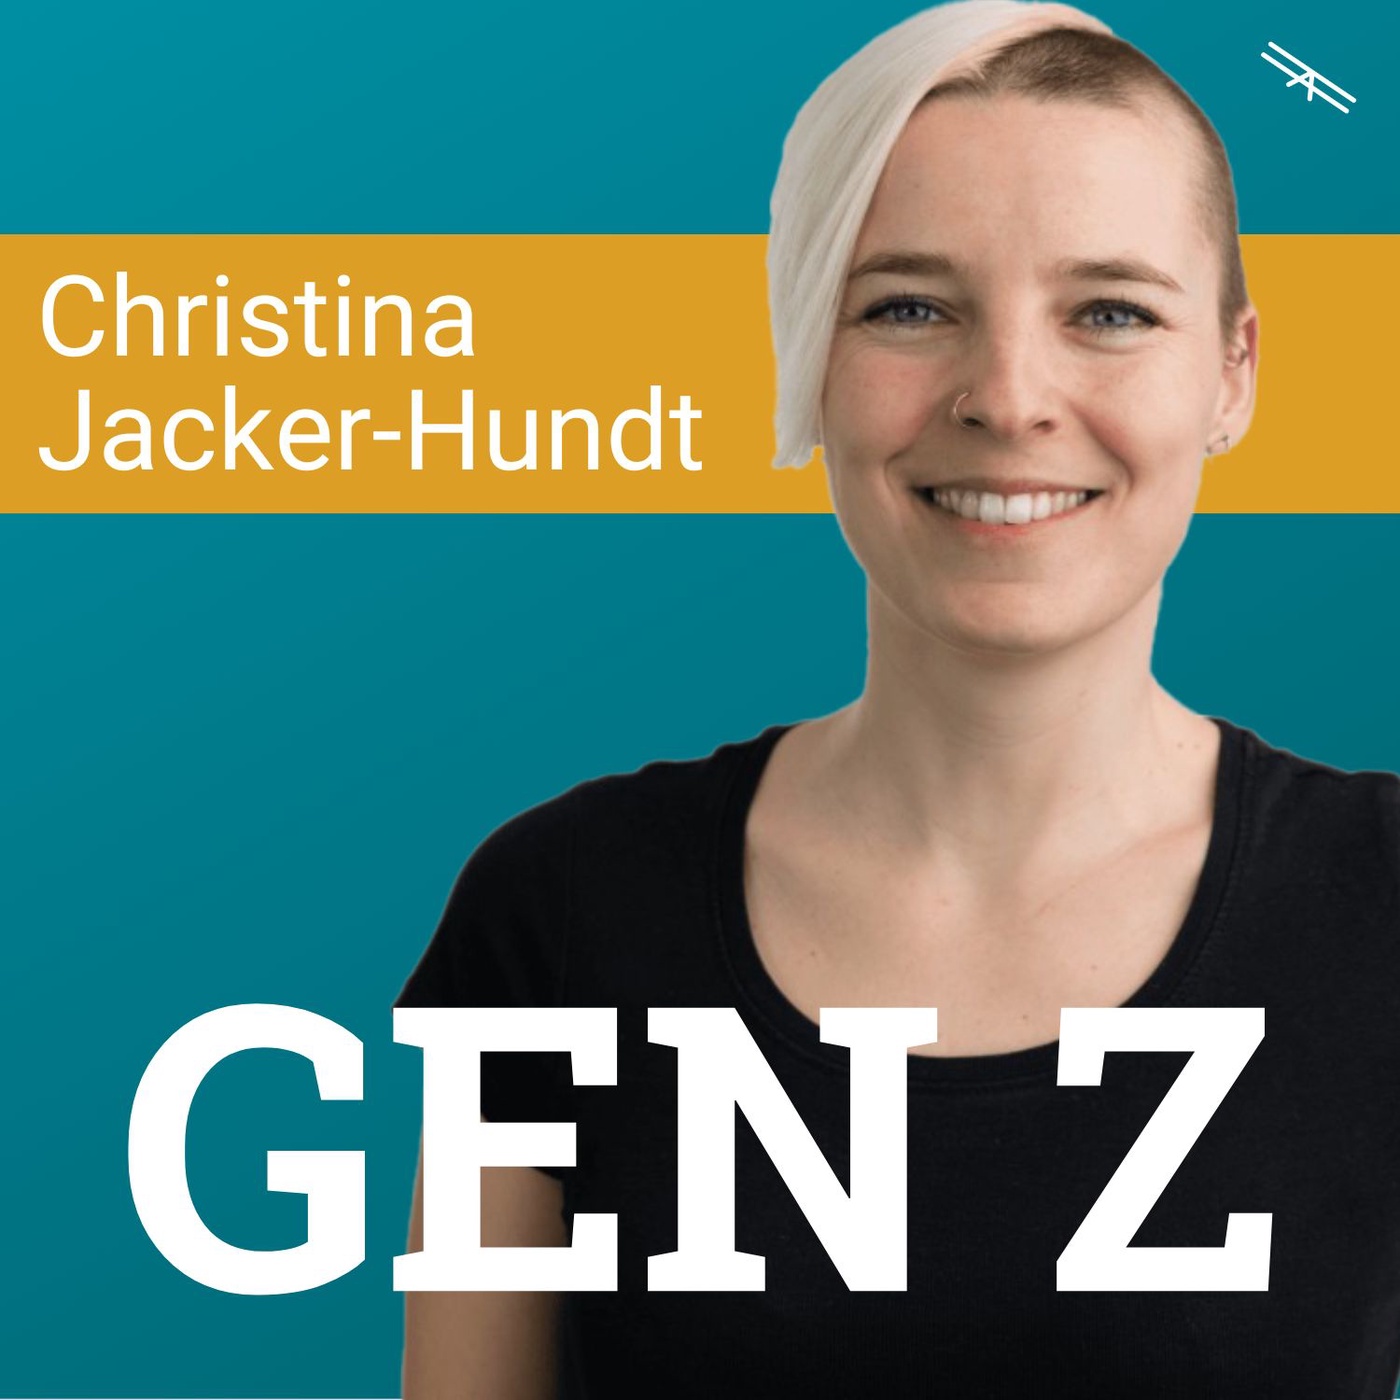 #92 Generation Z auf LinkedIn. Interview mit Dr. Christina Jacker-Hundt